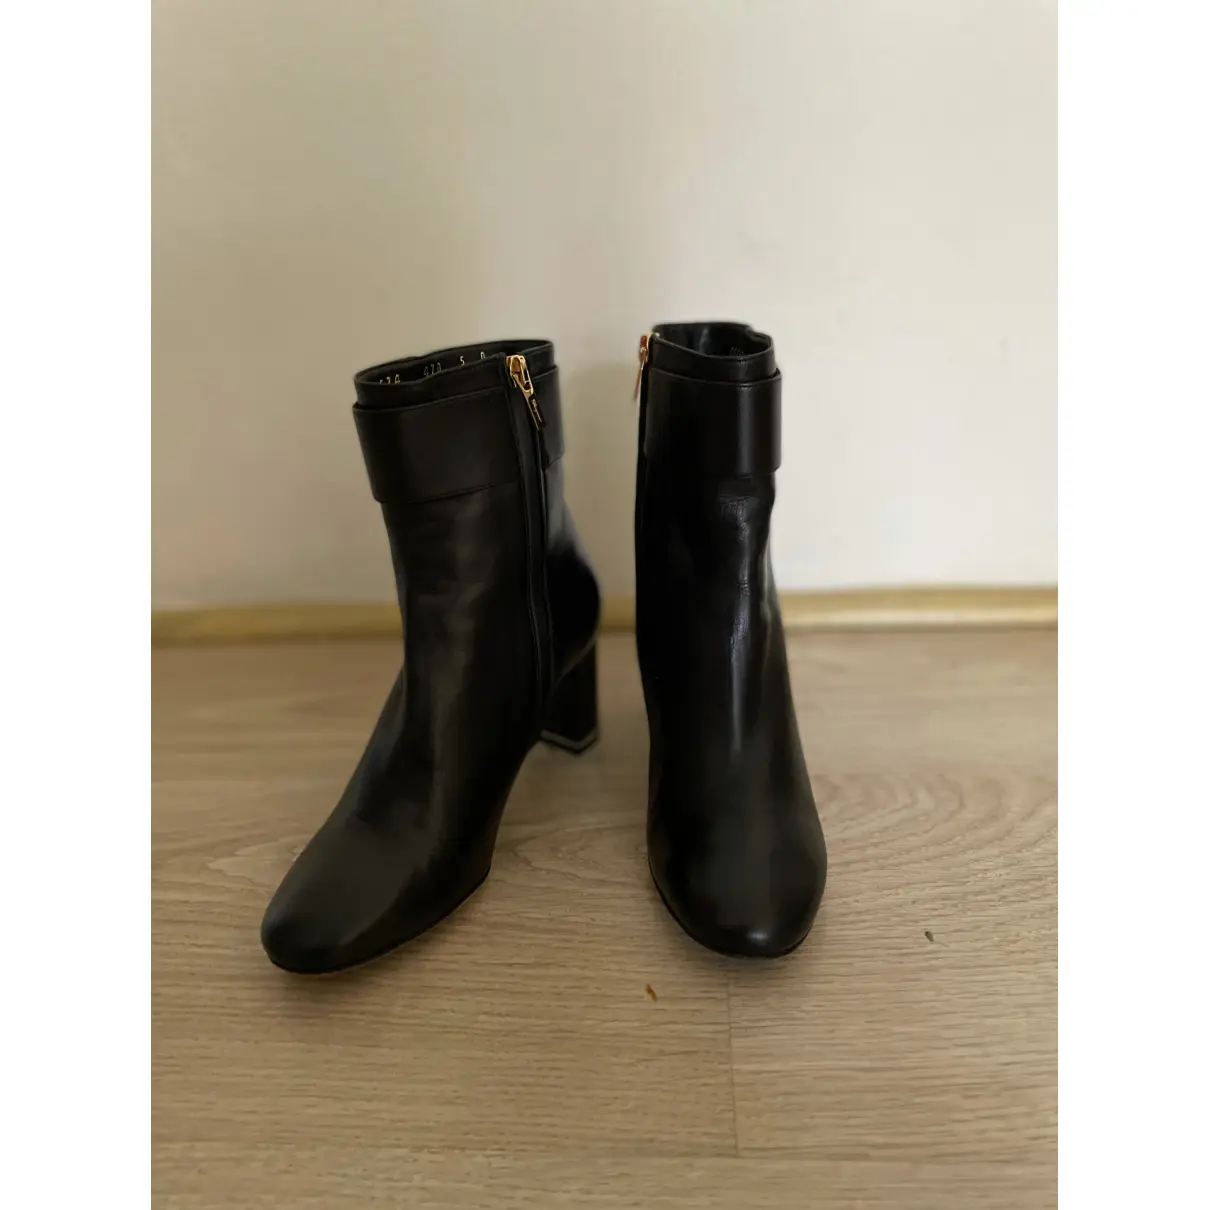 Buy Salvatore Ferragamo Leather buckled boots online